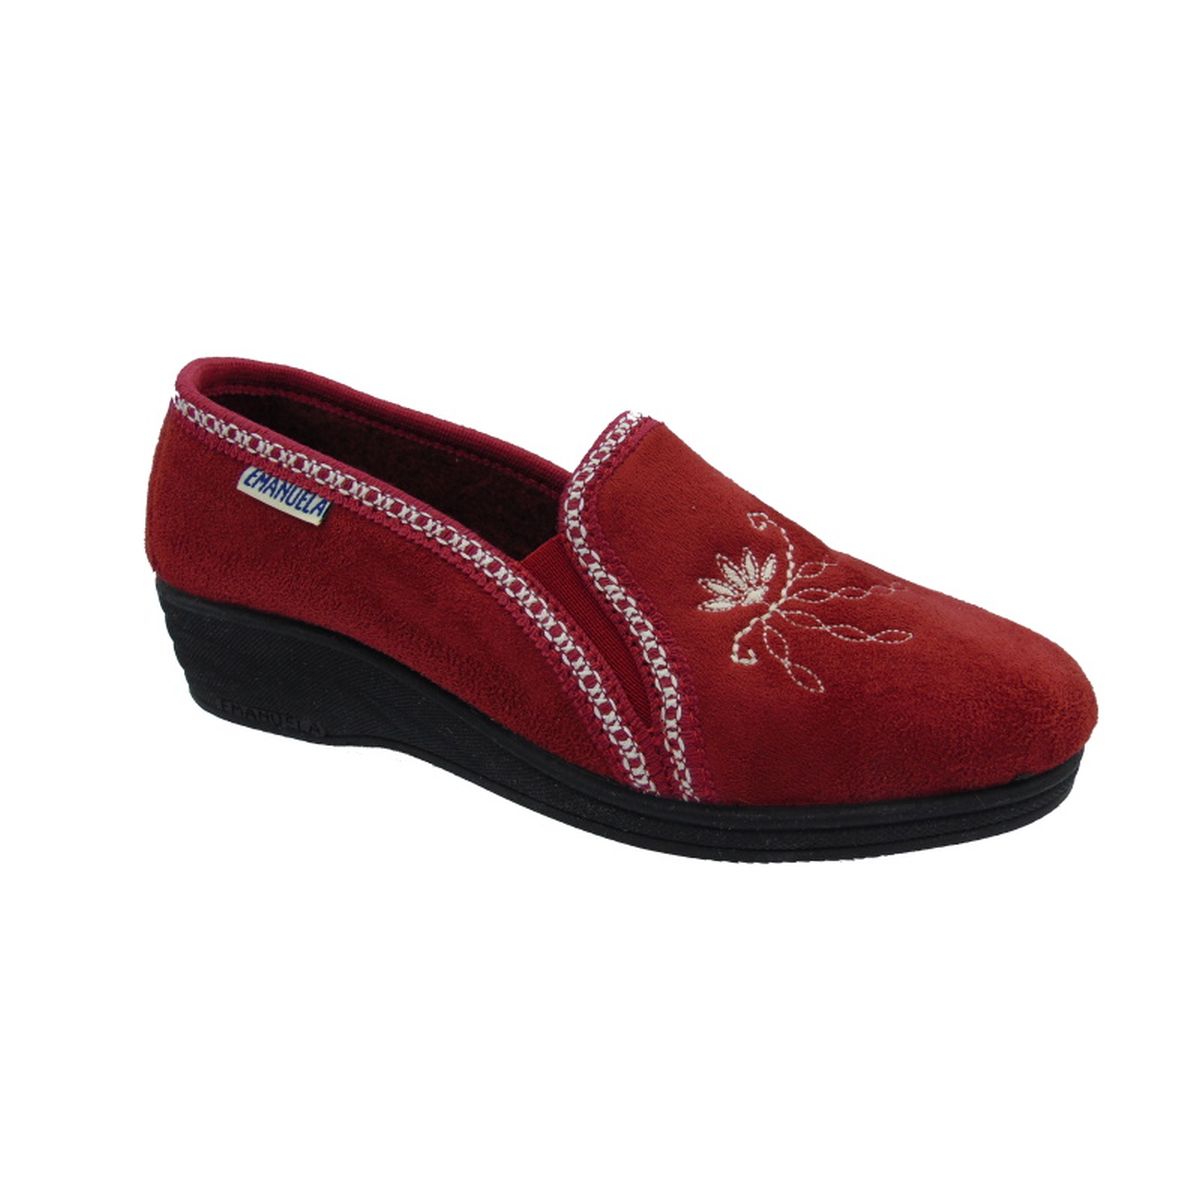 Pantofola Donna con elastici laterali Emanuela 855 Bordeauximg